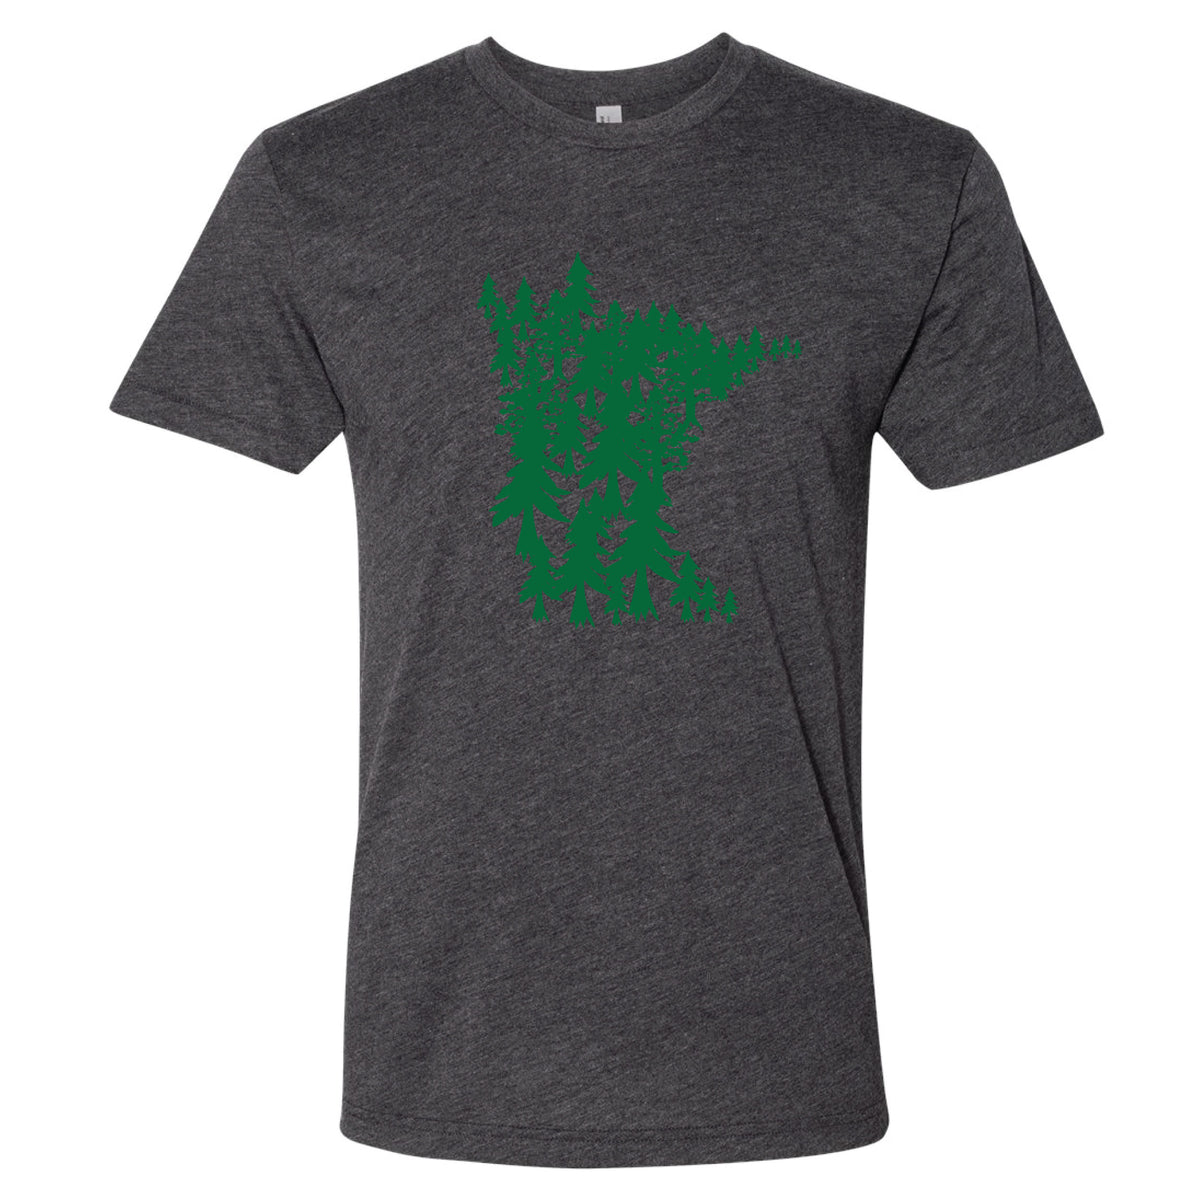 Minnesota Green Trees T-Shirt – Minnesota Awesome